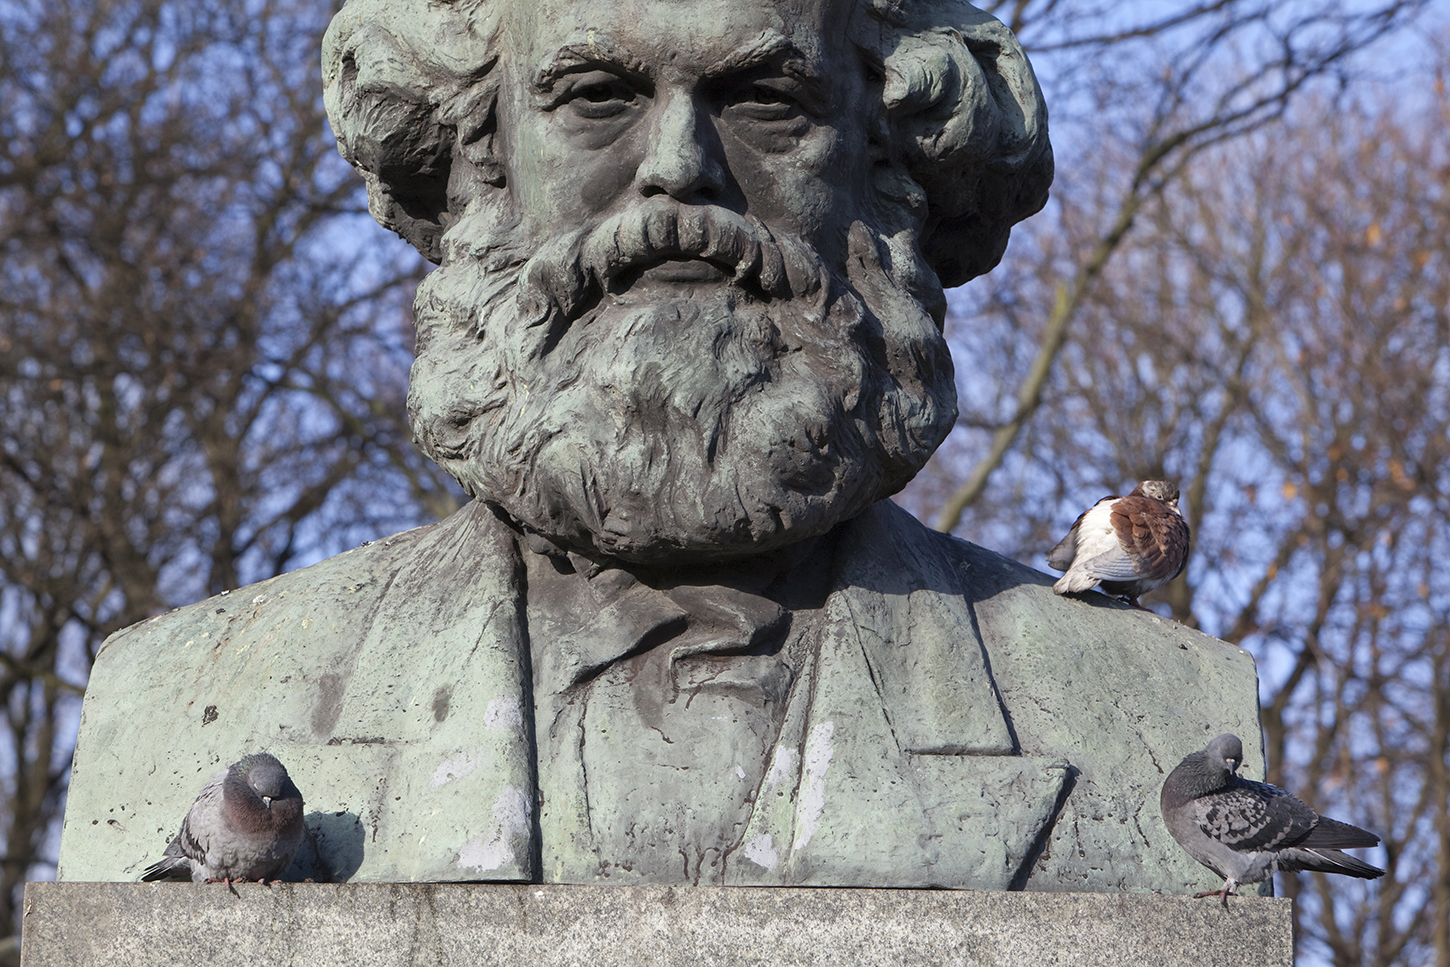 A statue of Karl Marx in Kaliningrad, Russia. ALEX POTEMKIN VIA GETTY IMAGES